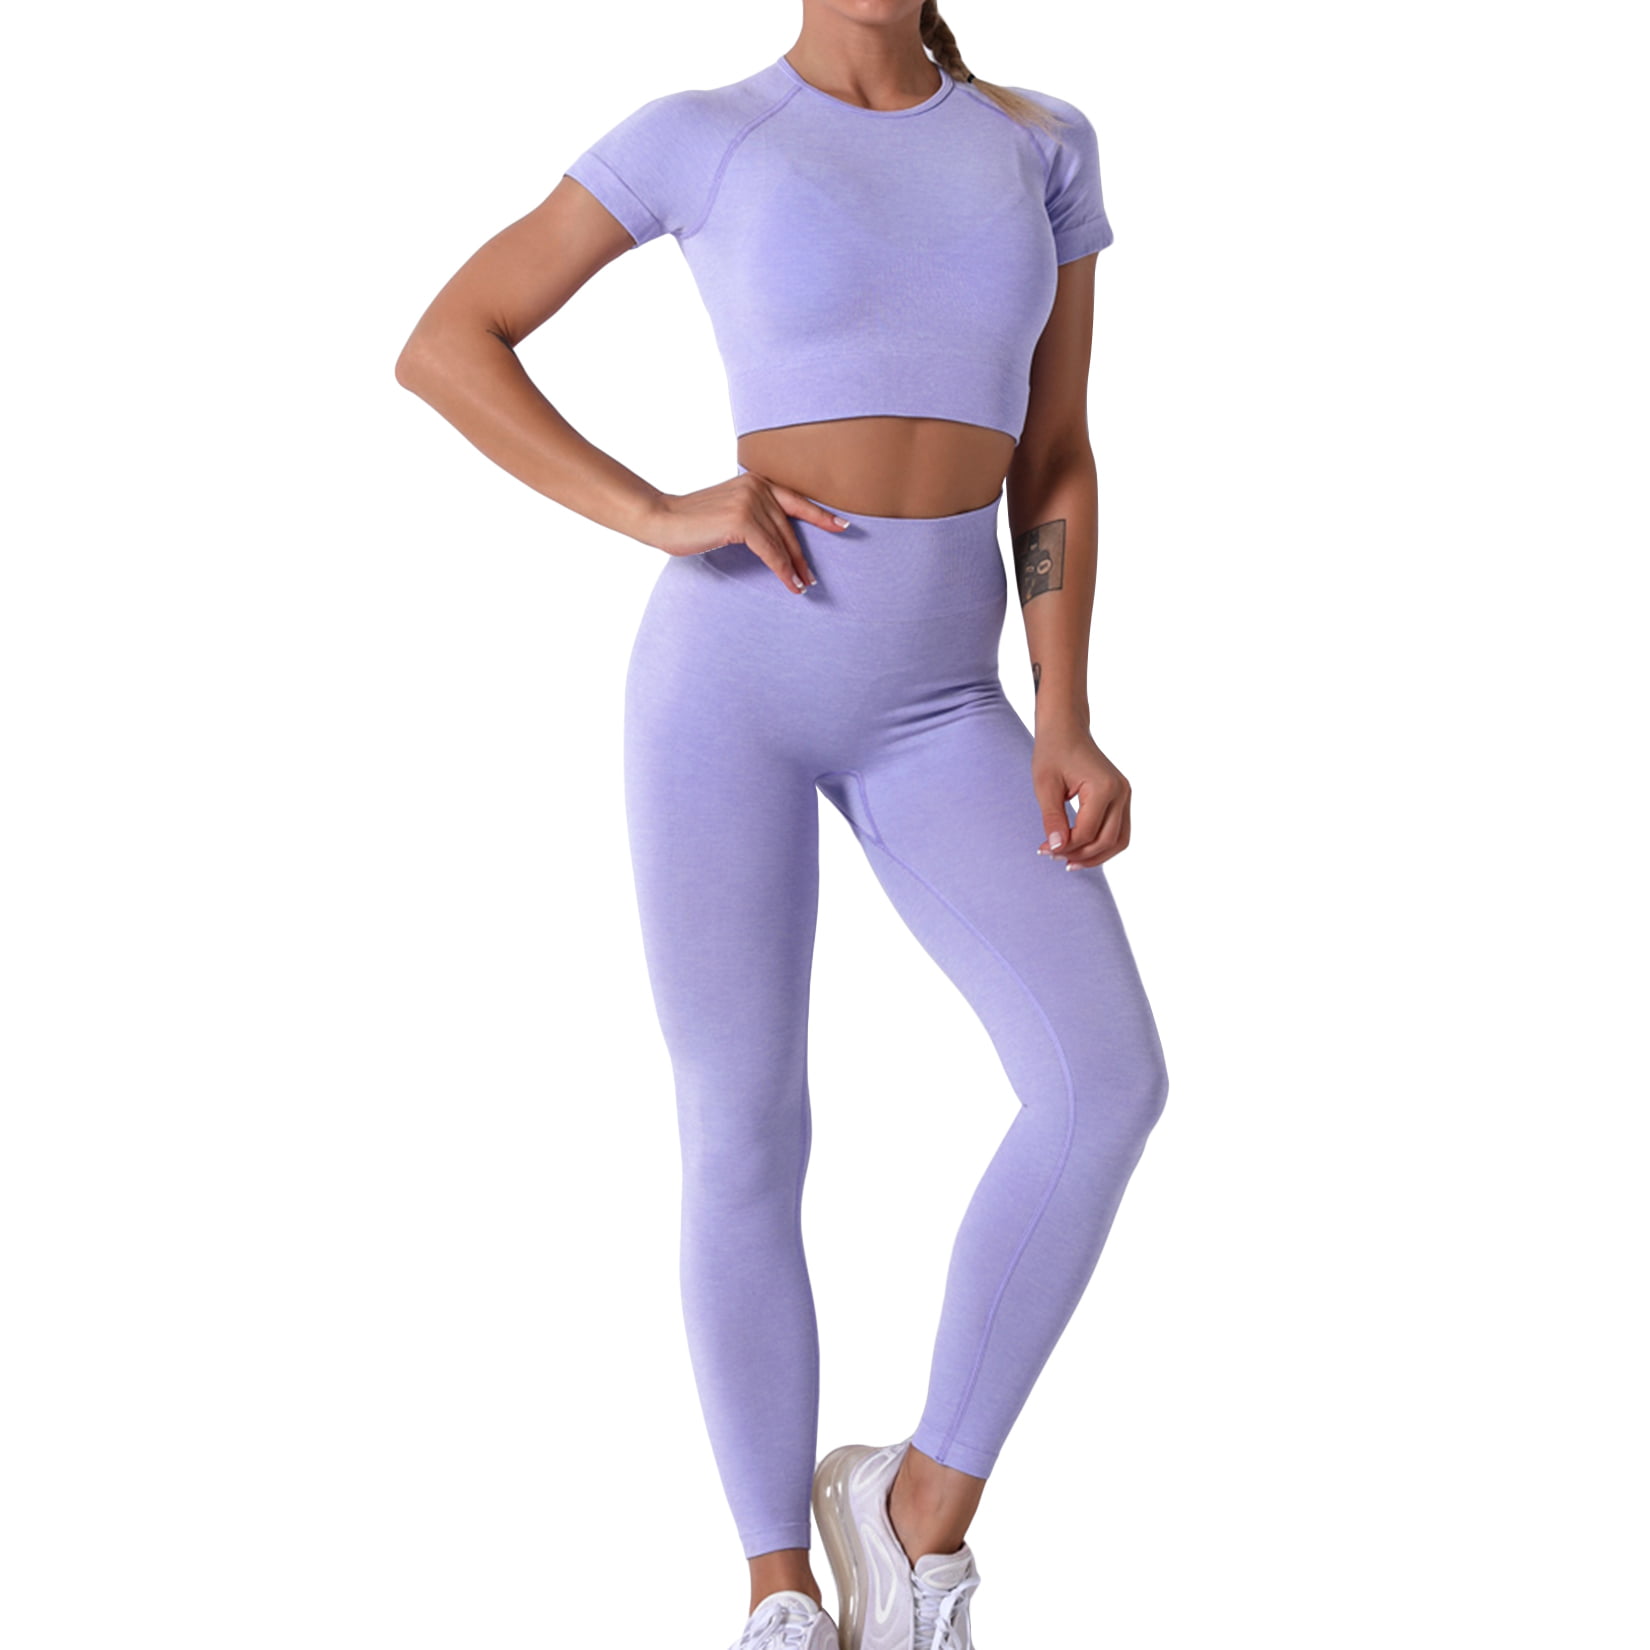 lululemon athletica, Pants & Jumpsuits, Womens Lululemon Purple  Activewear Capri Leggings Size 6